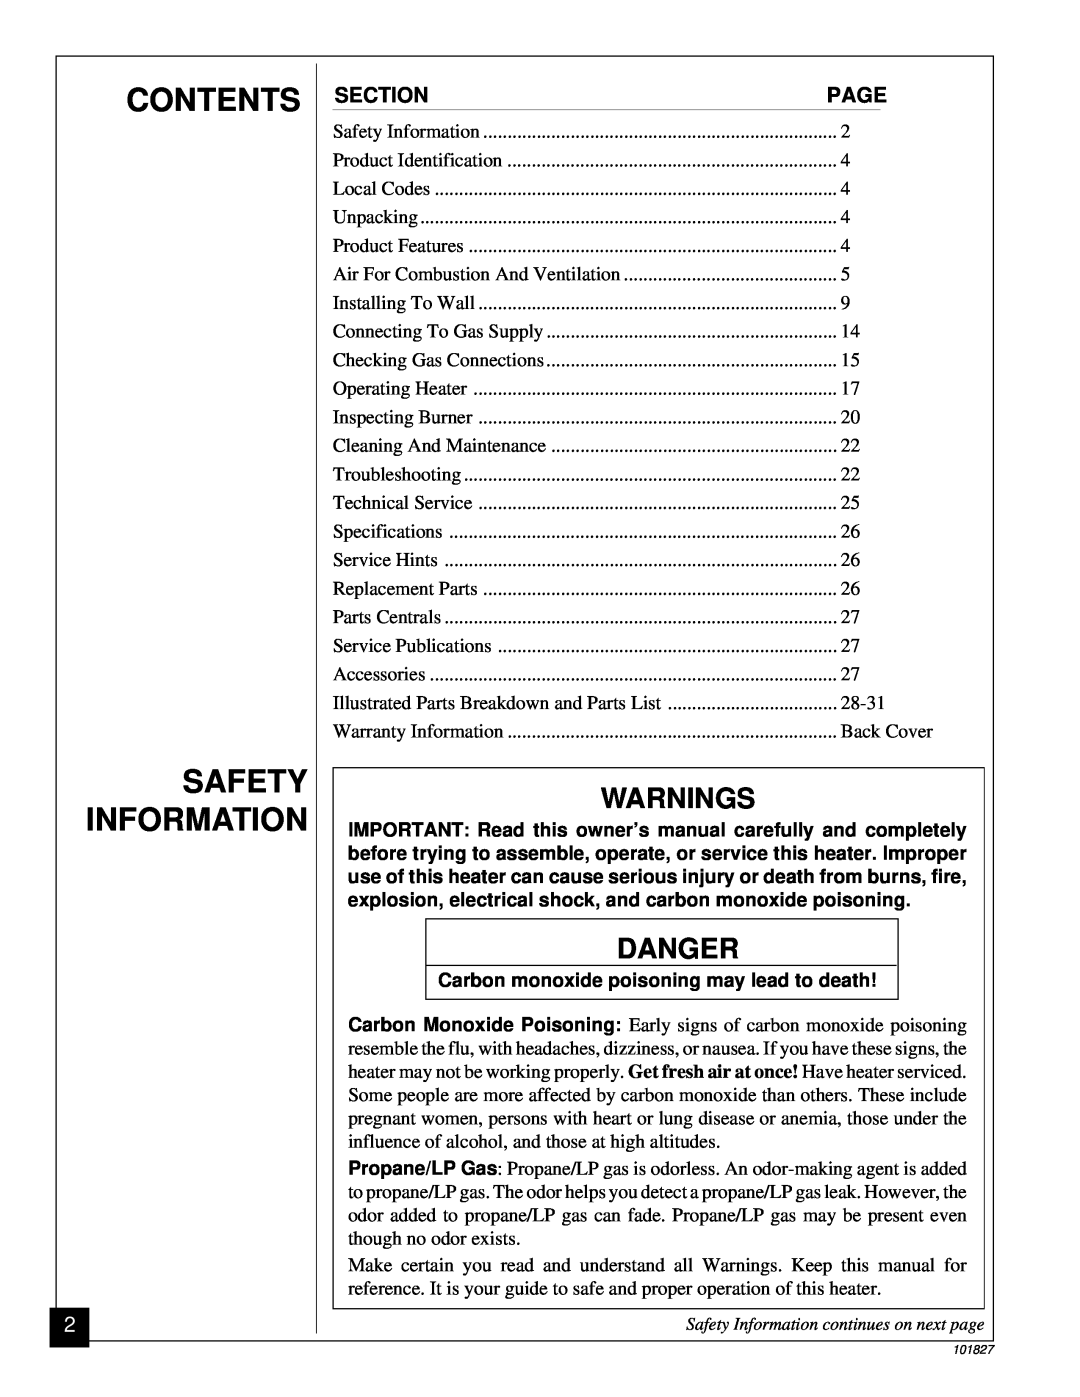 Desa CGP16RA, CGP26D installation manual Contents, Safety, Information, Warnings, Danger 